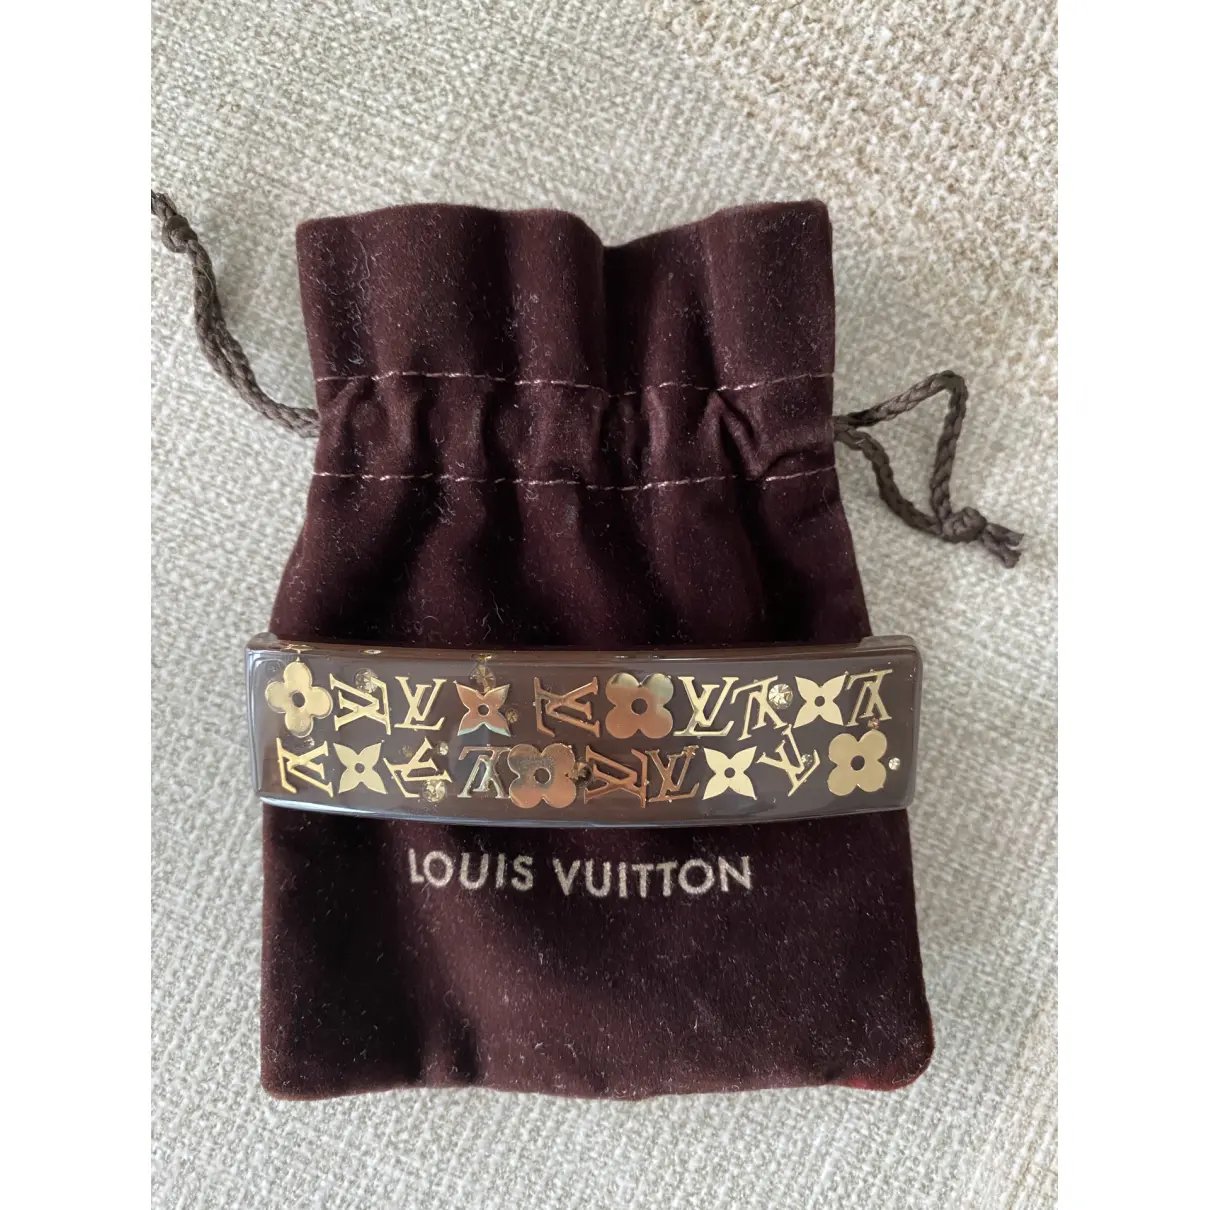 Buy Louis Vuitton Monogram hair accessory online